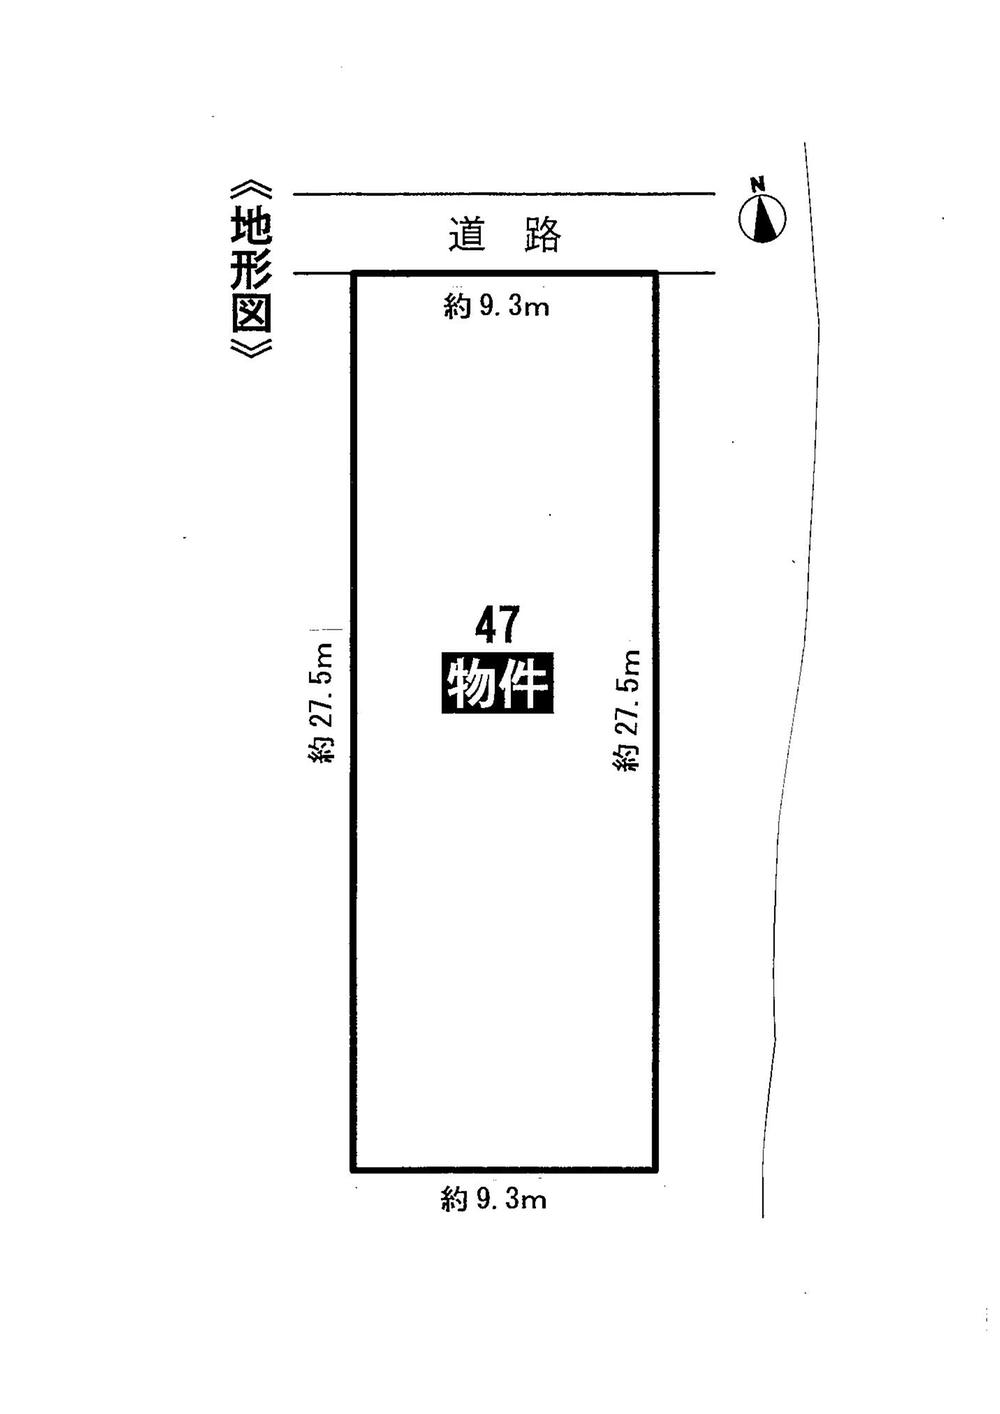 Compartment figure. Land price 20,700,000 yen, Land area 254 sq m